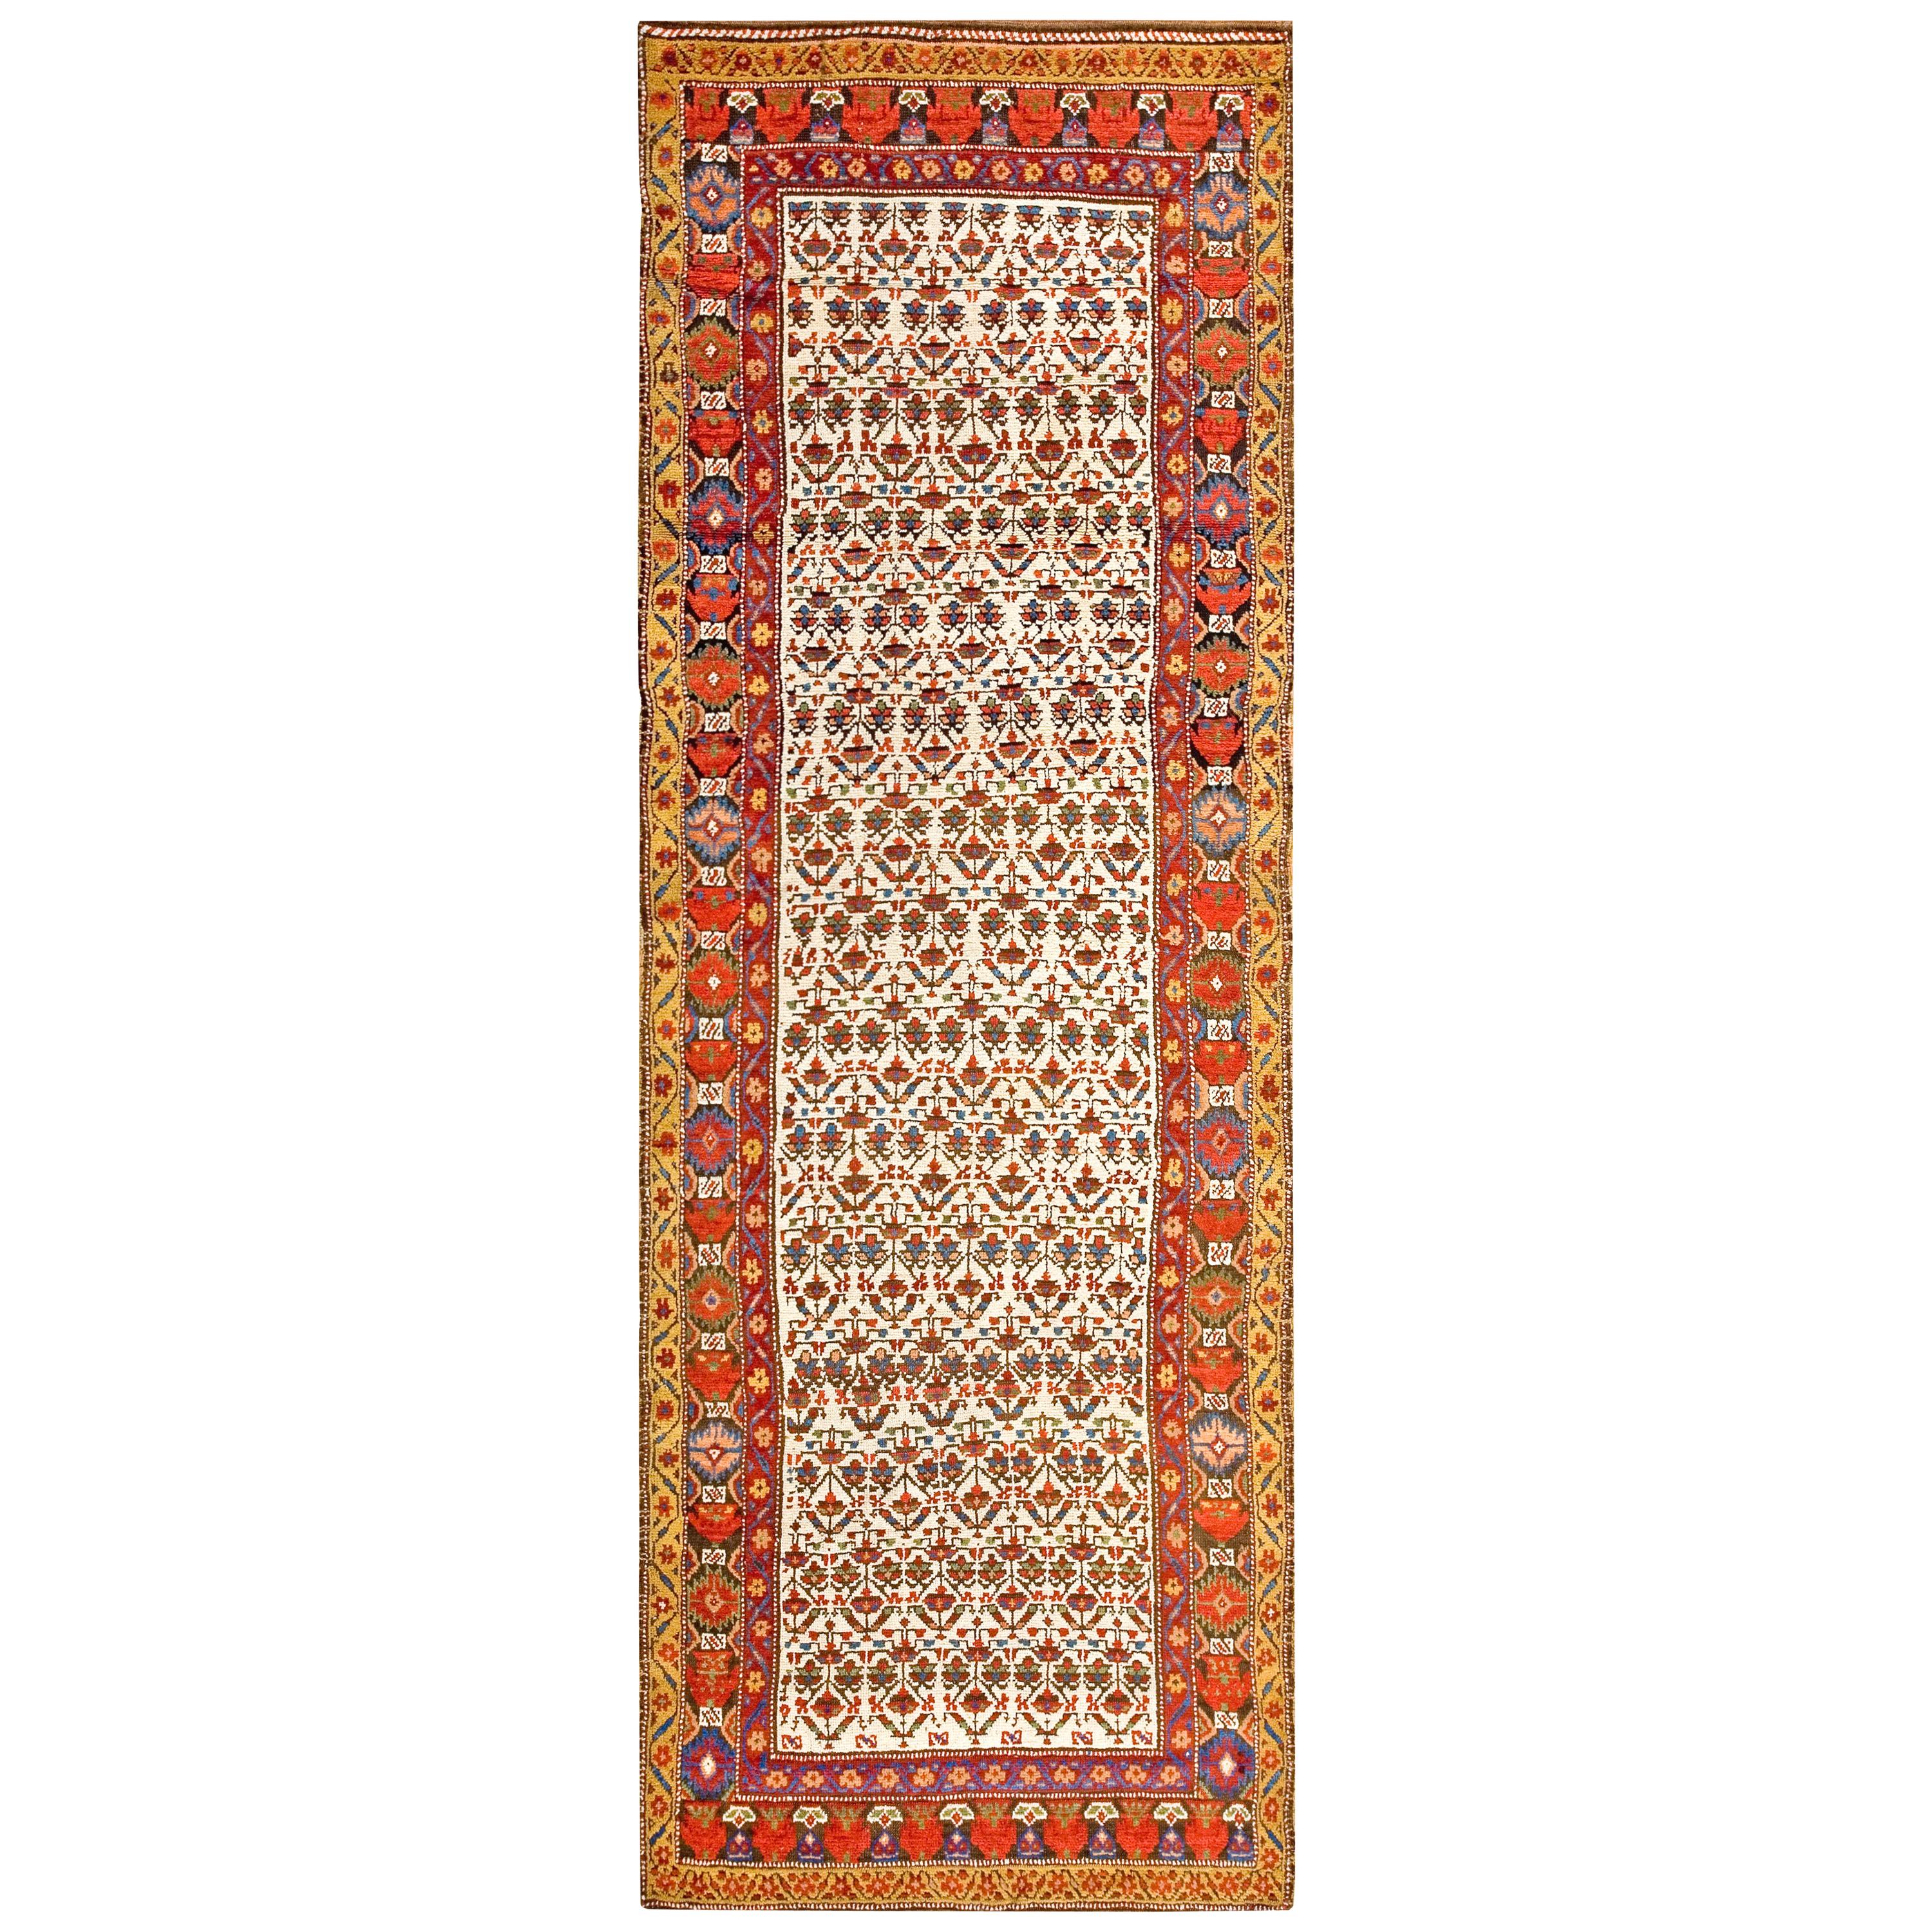 Mid 19th Century Persian Kurdish Carpet ( 3'6" x 10'6" - 107 x 320 ) For Sale